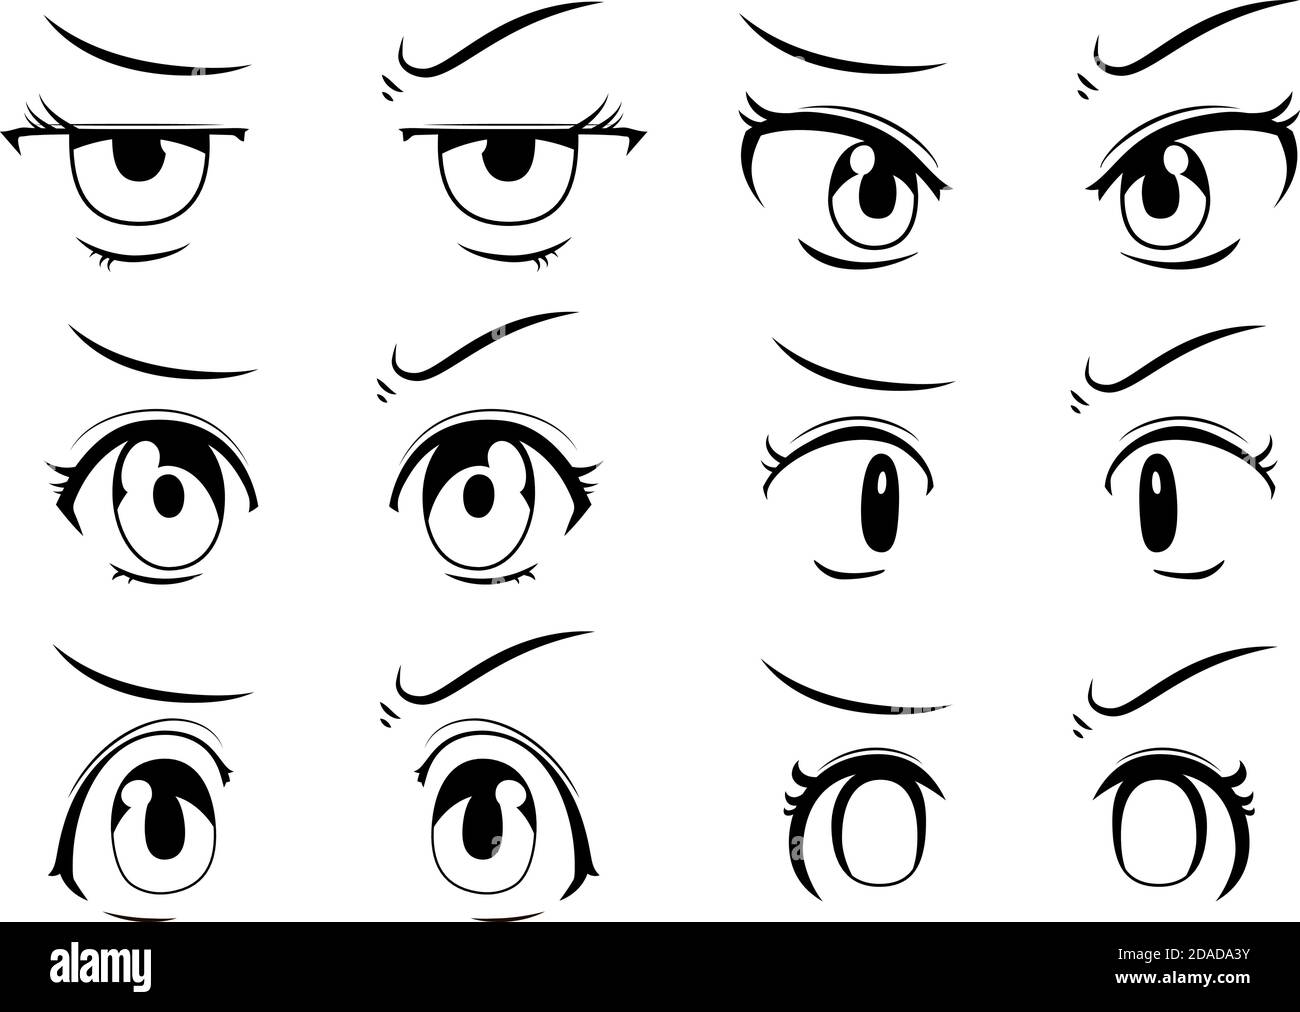 How to Draw Bored Anime or Manga Eyes  AnimeOutline